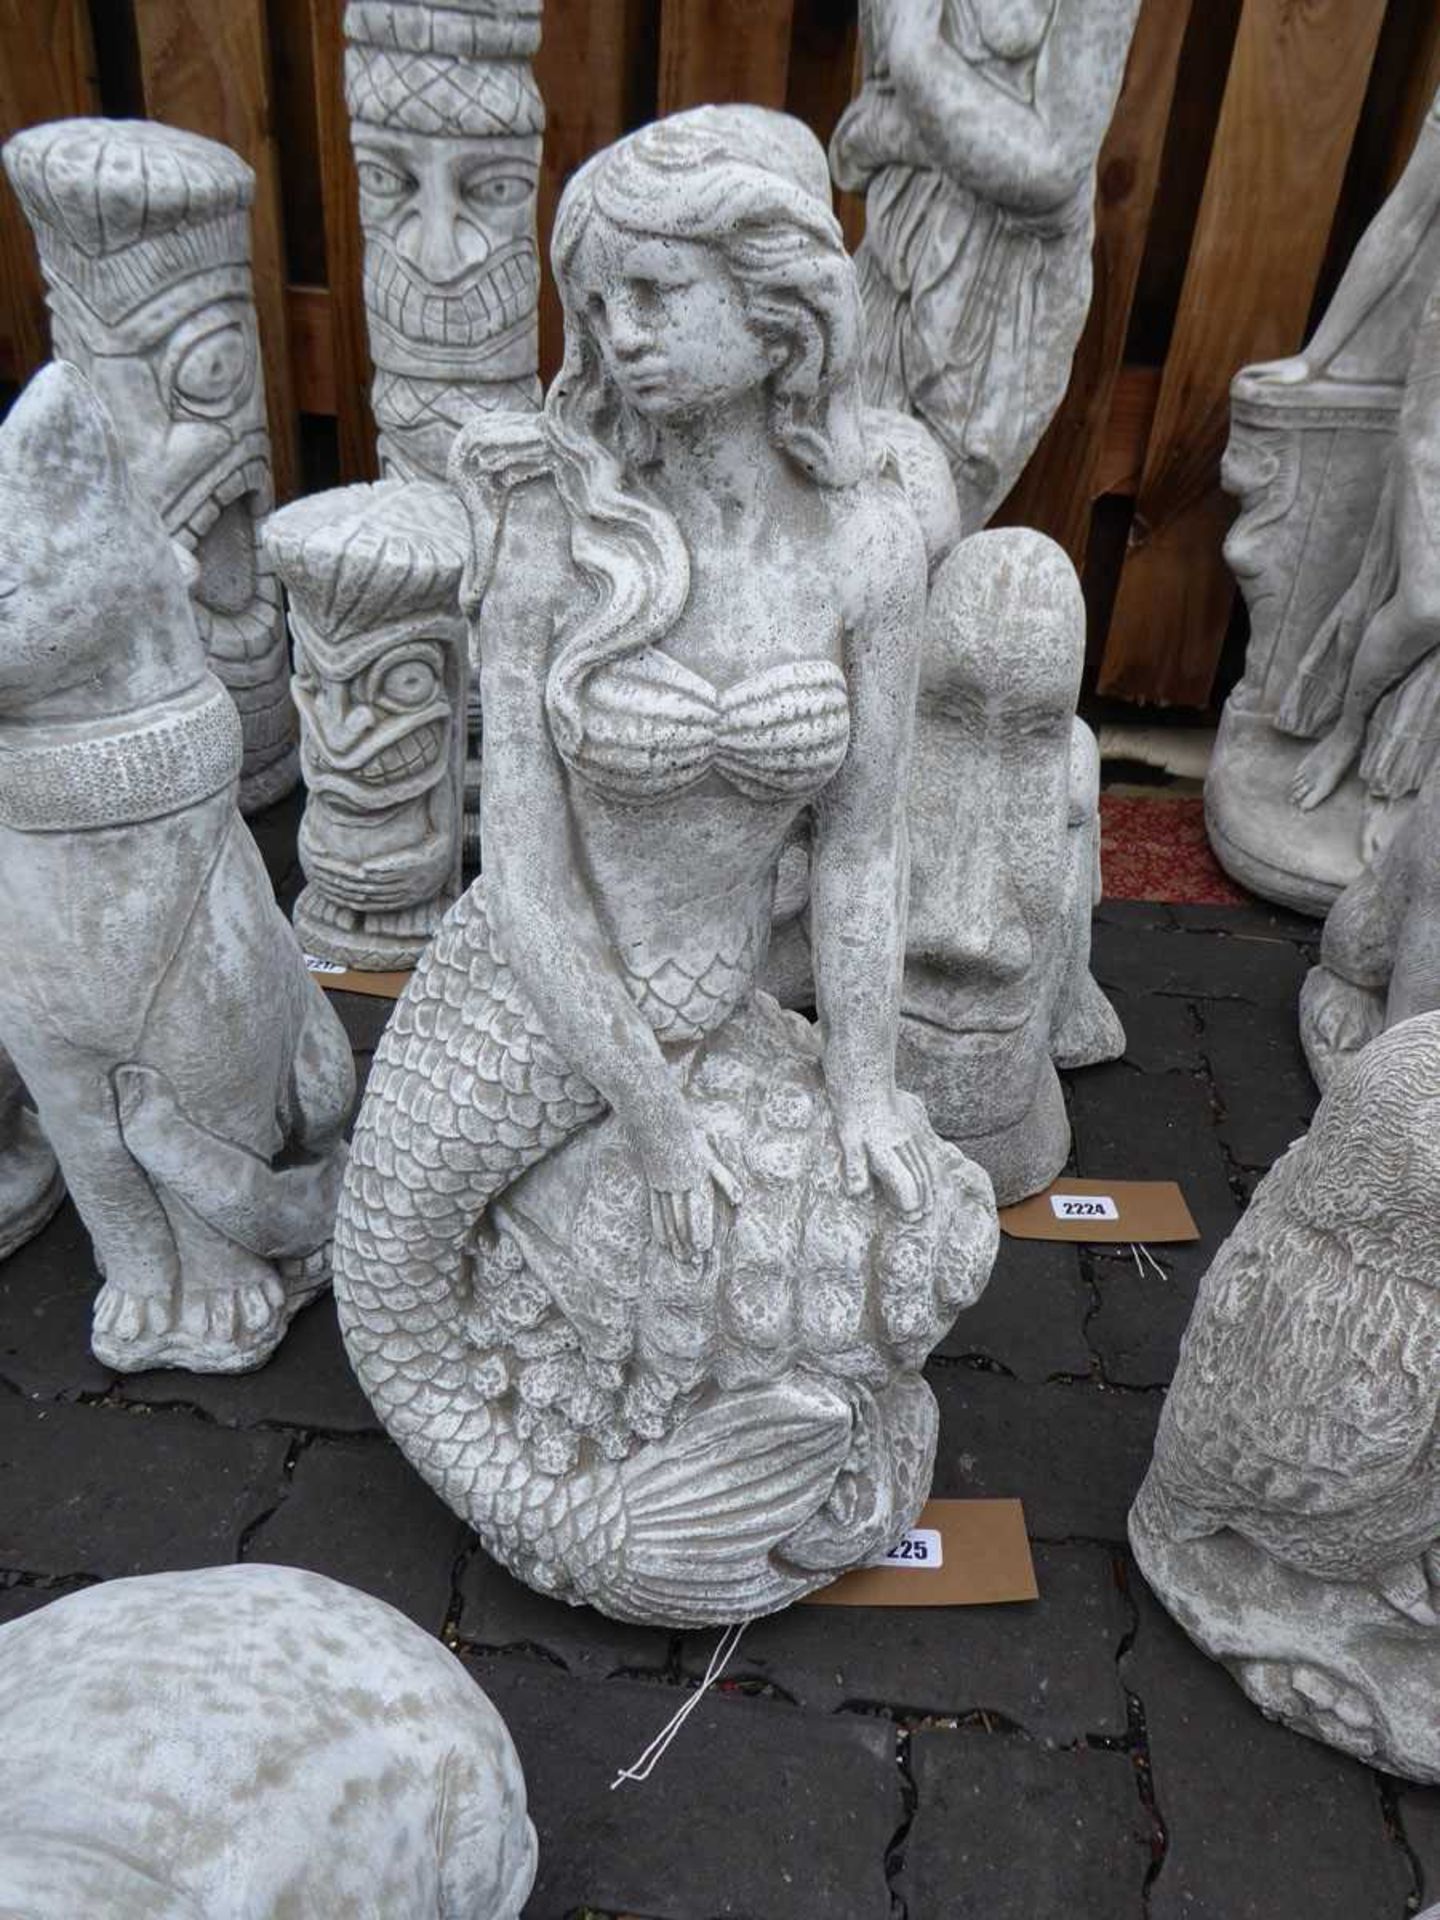 Mermaid concrete ornaments